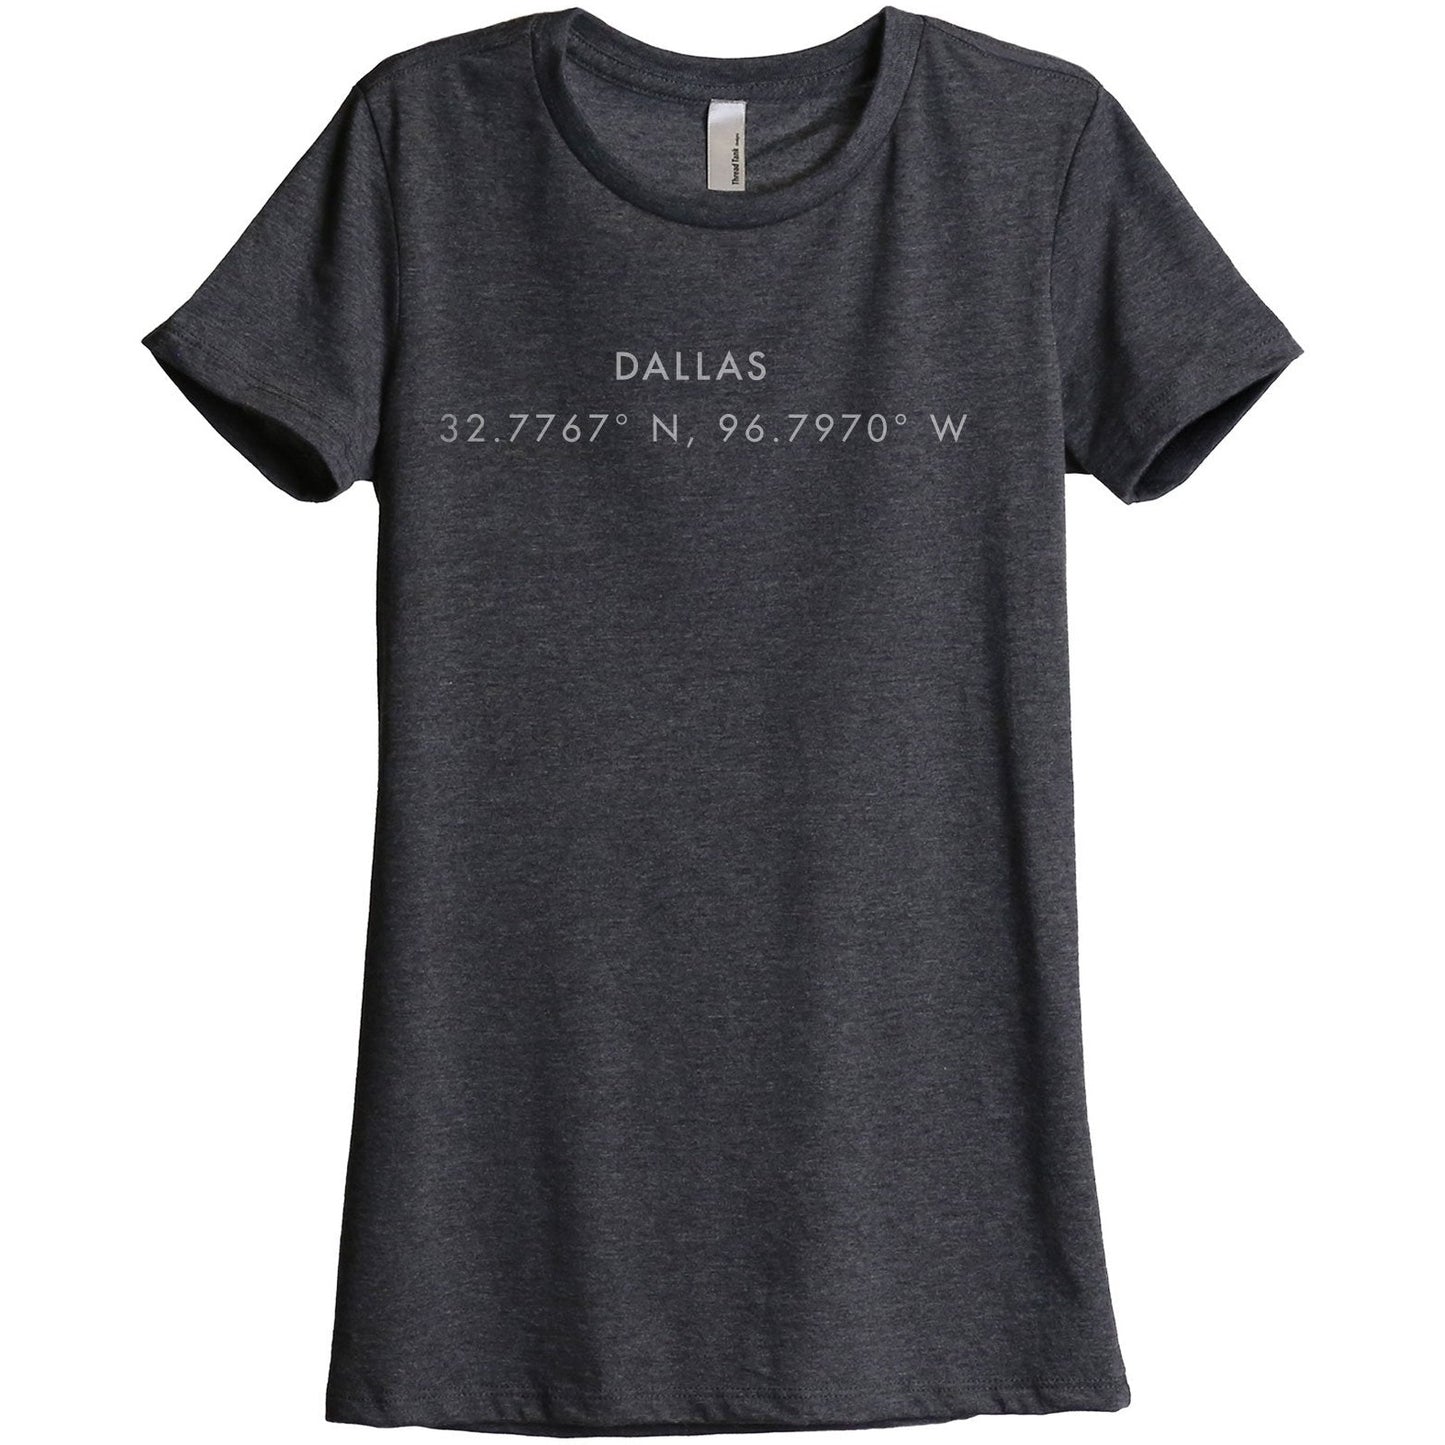 Dallas Texas Coordinates Women's Relaxed Crewneck T-Shirt Top Tee Charcoal Grey
